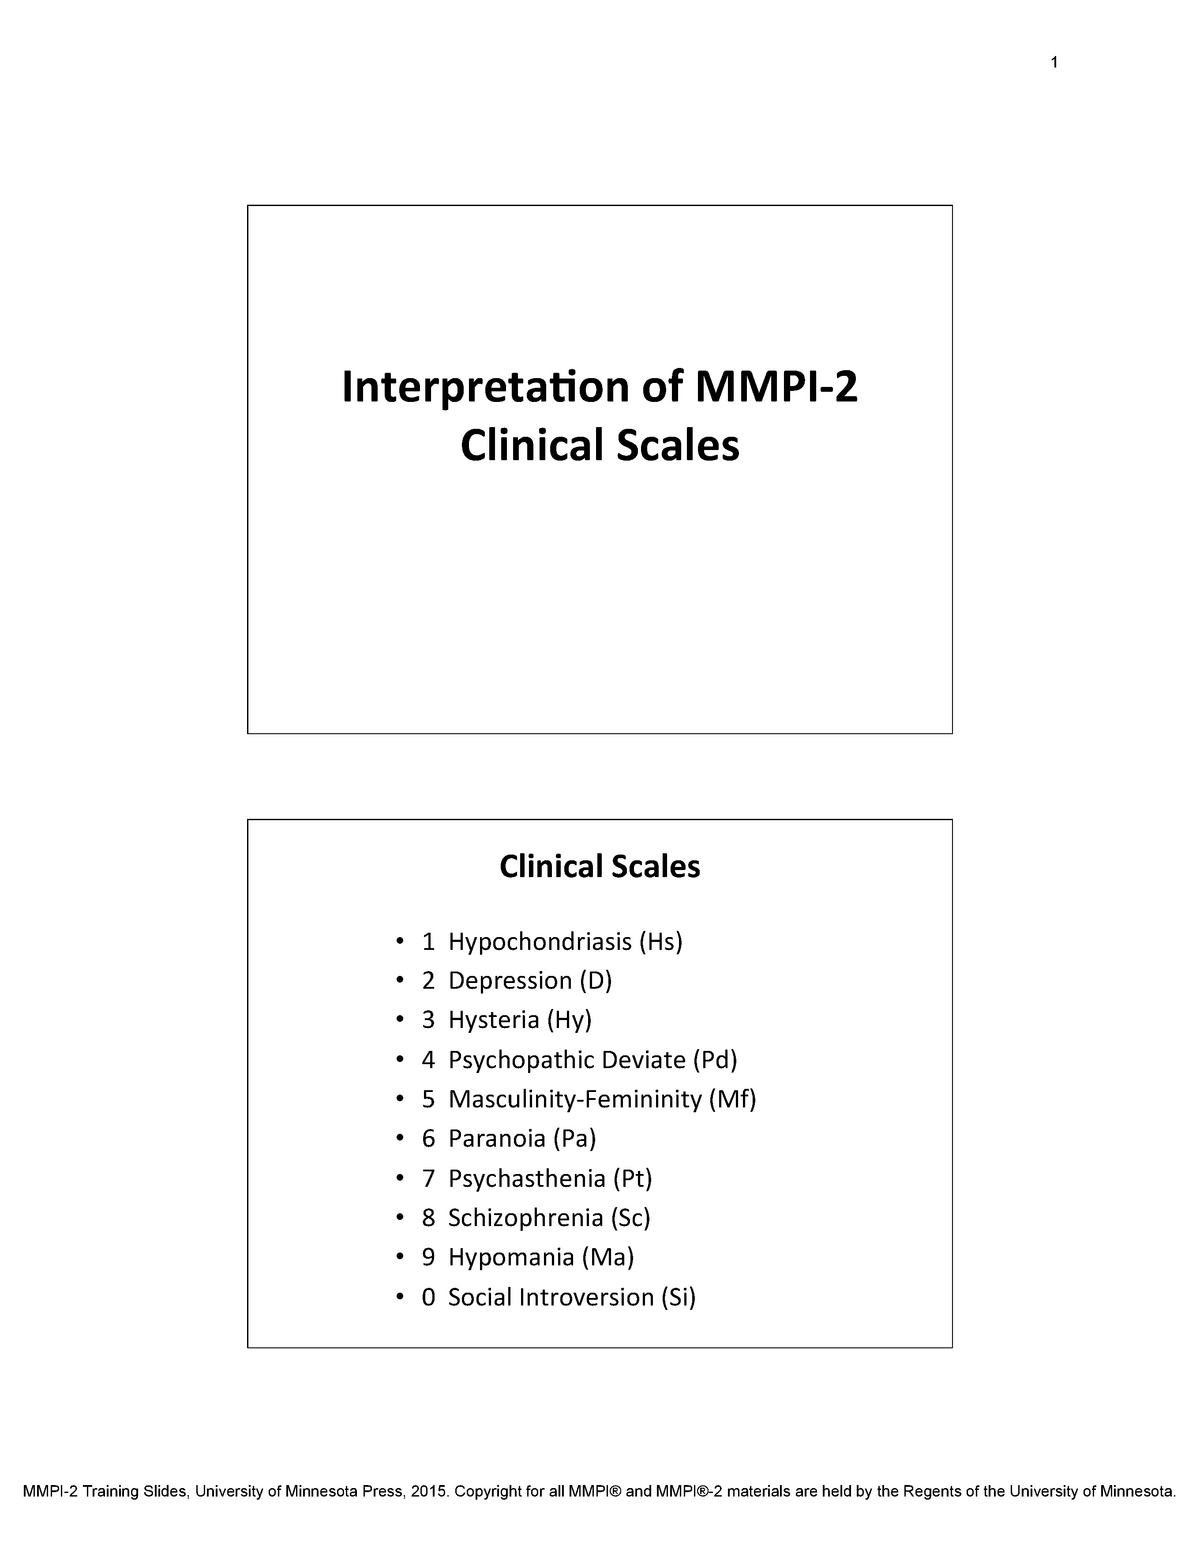 mmpi-2 score interpretation